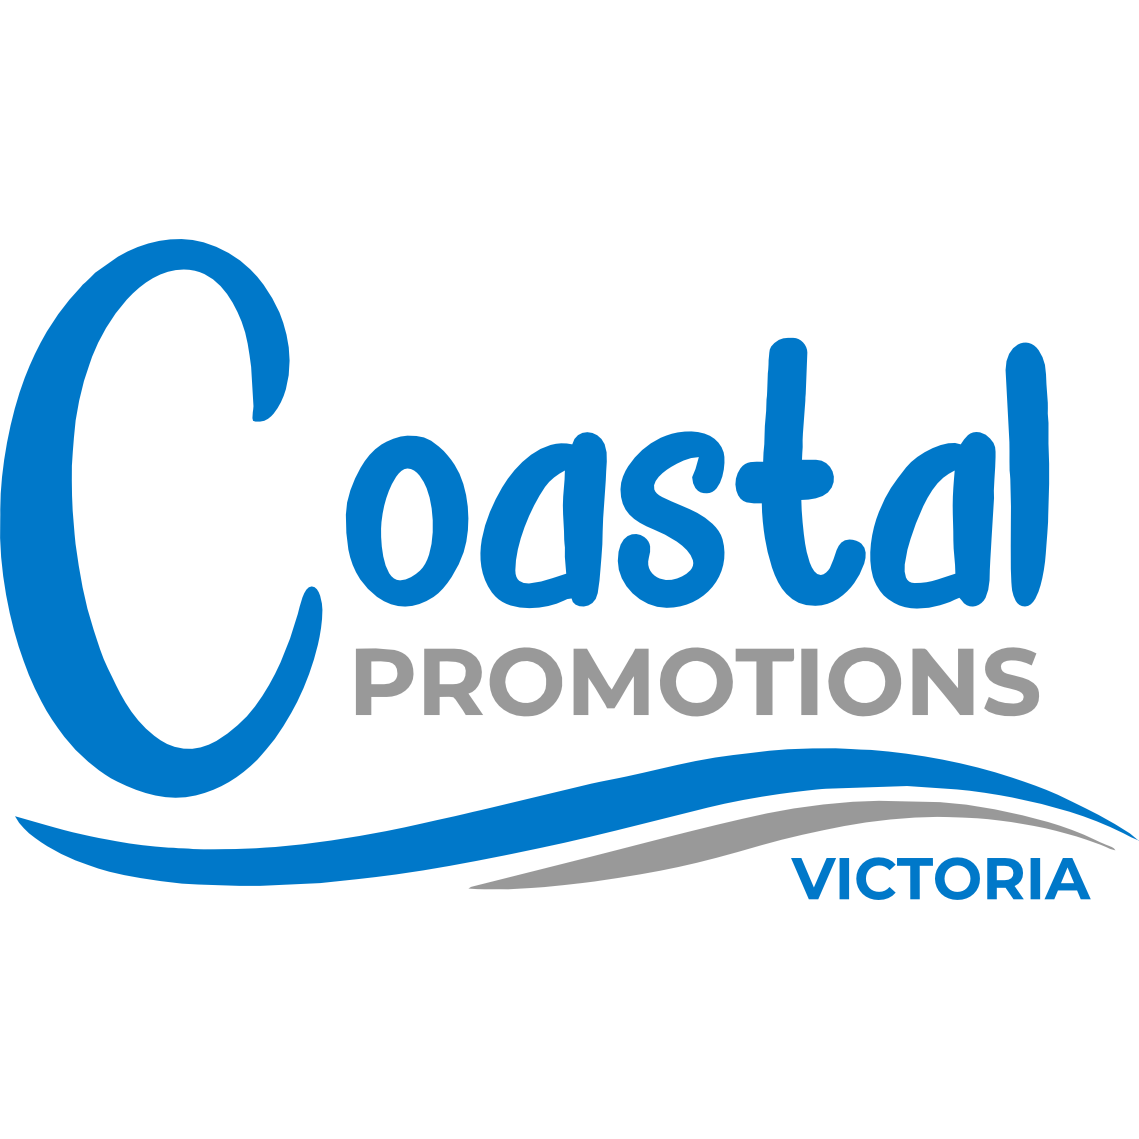 Coastal Promotions